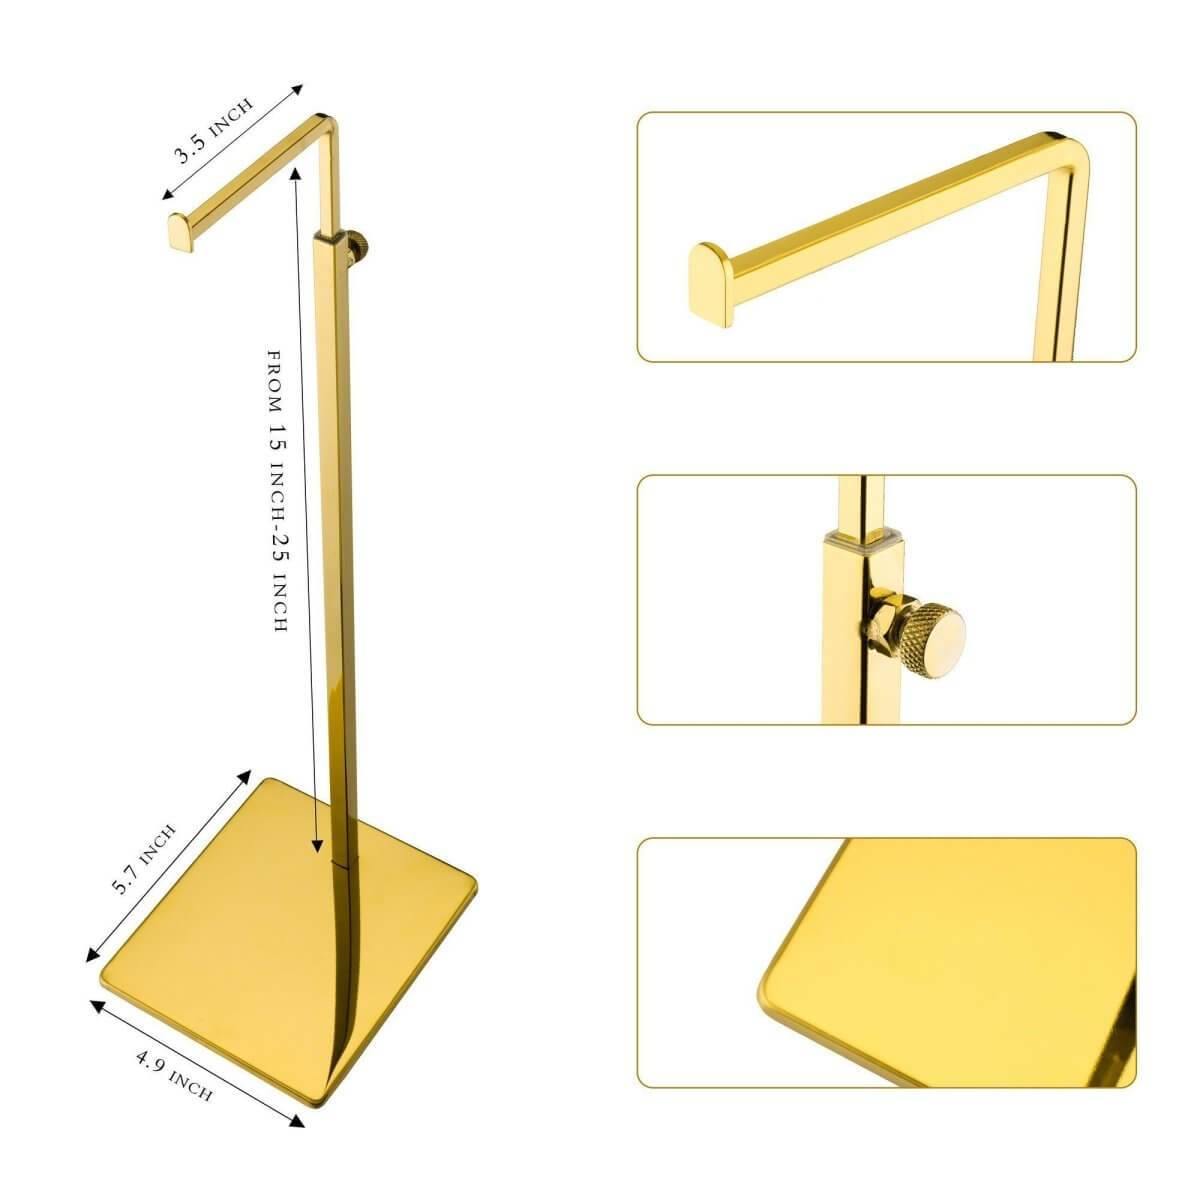 4 Pcs Gold Purse Display Stand Stainless Steel Handbag Display Stand Rack  Adjust | eBay